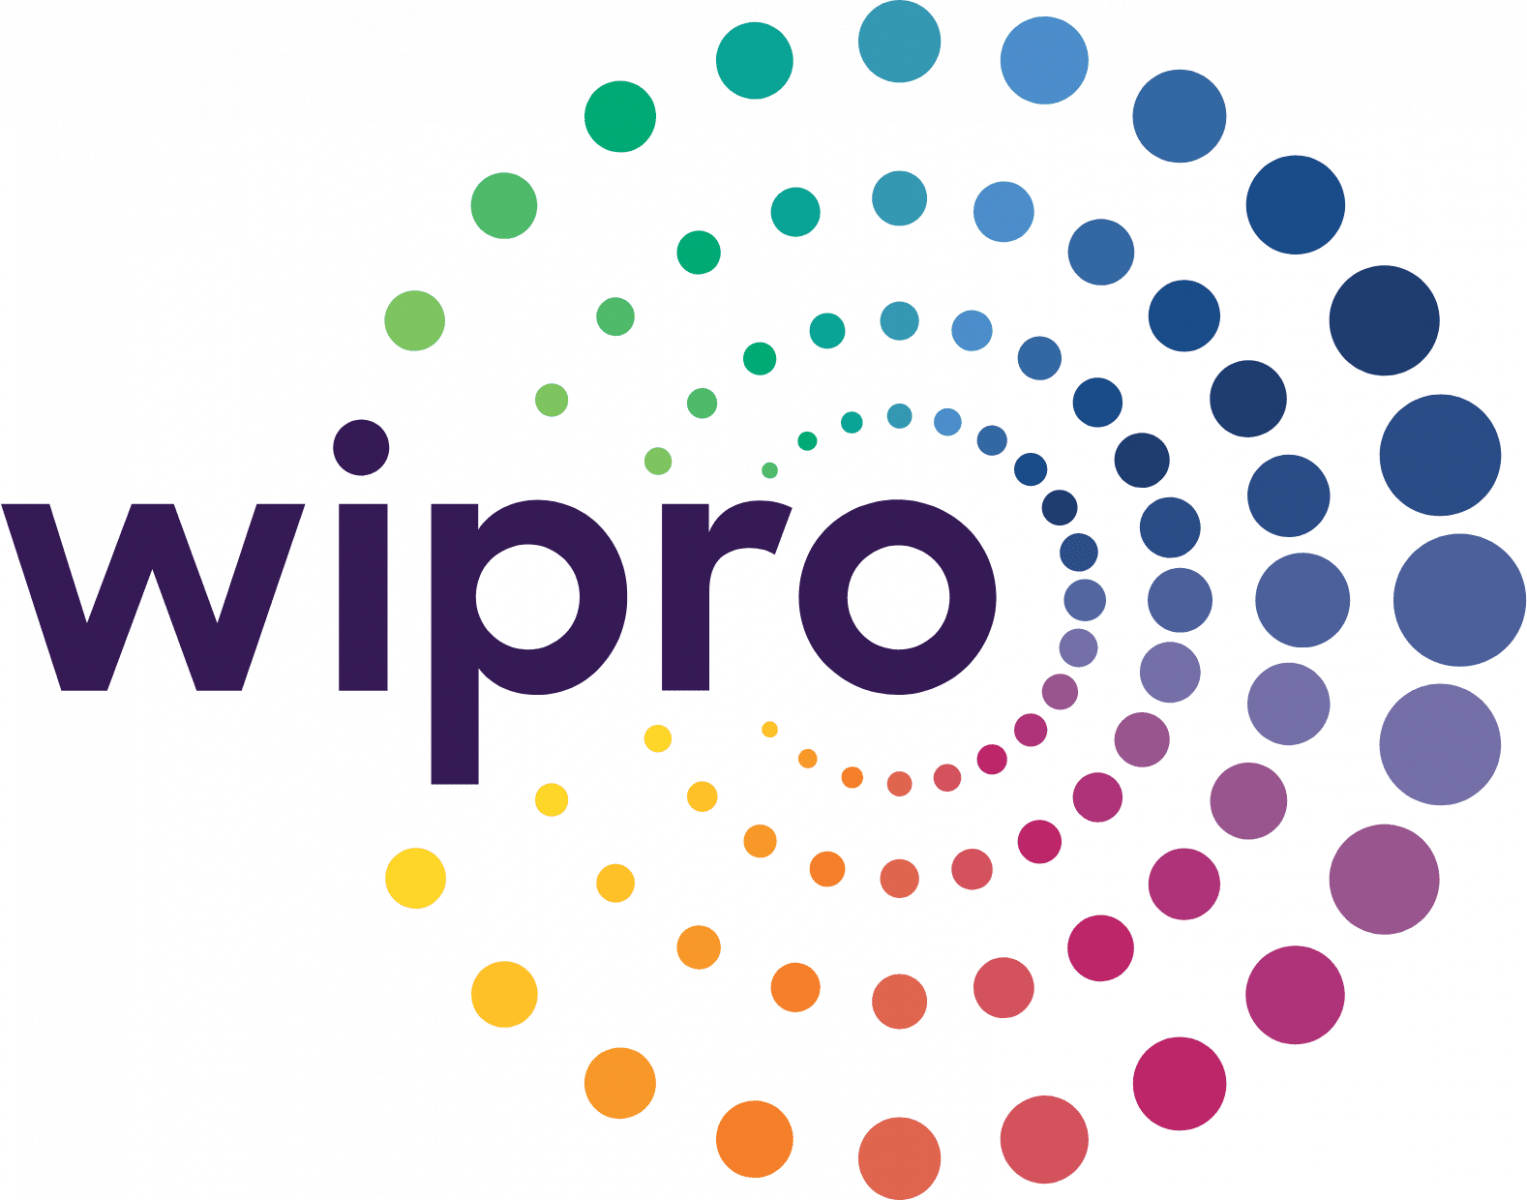 Wipro it companies in Delhi